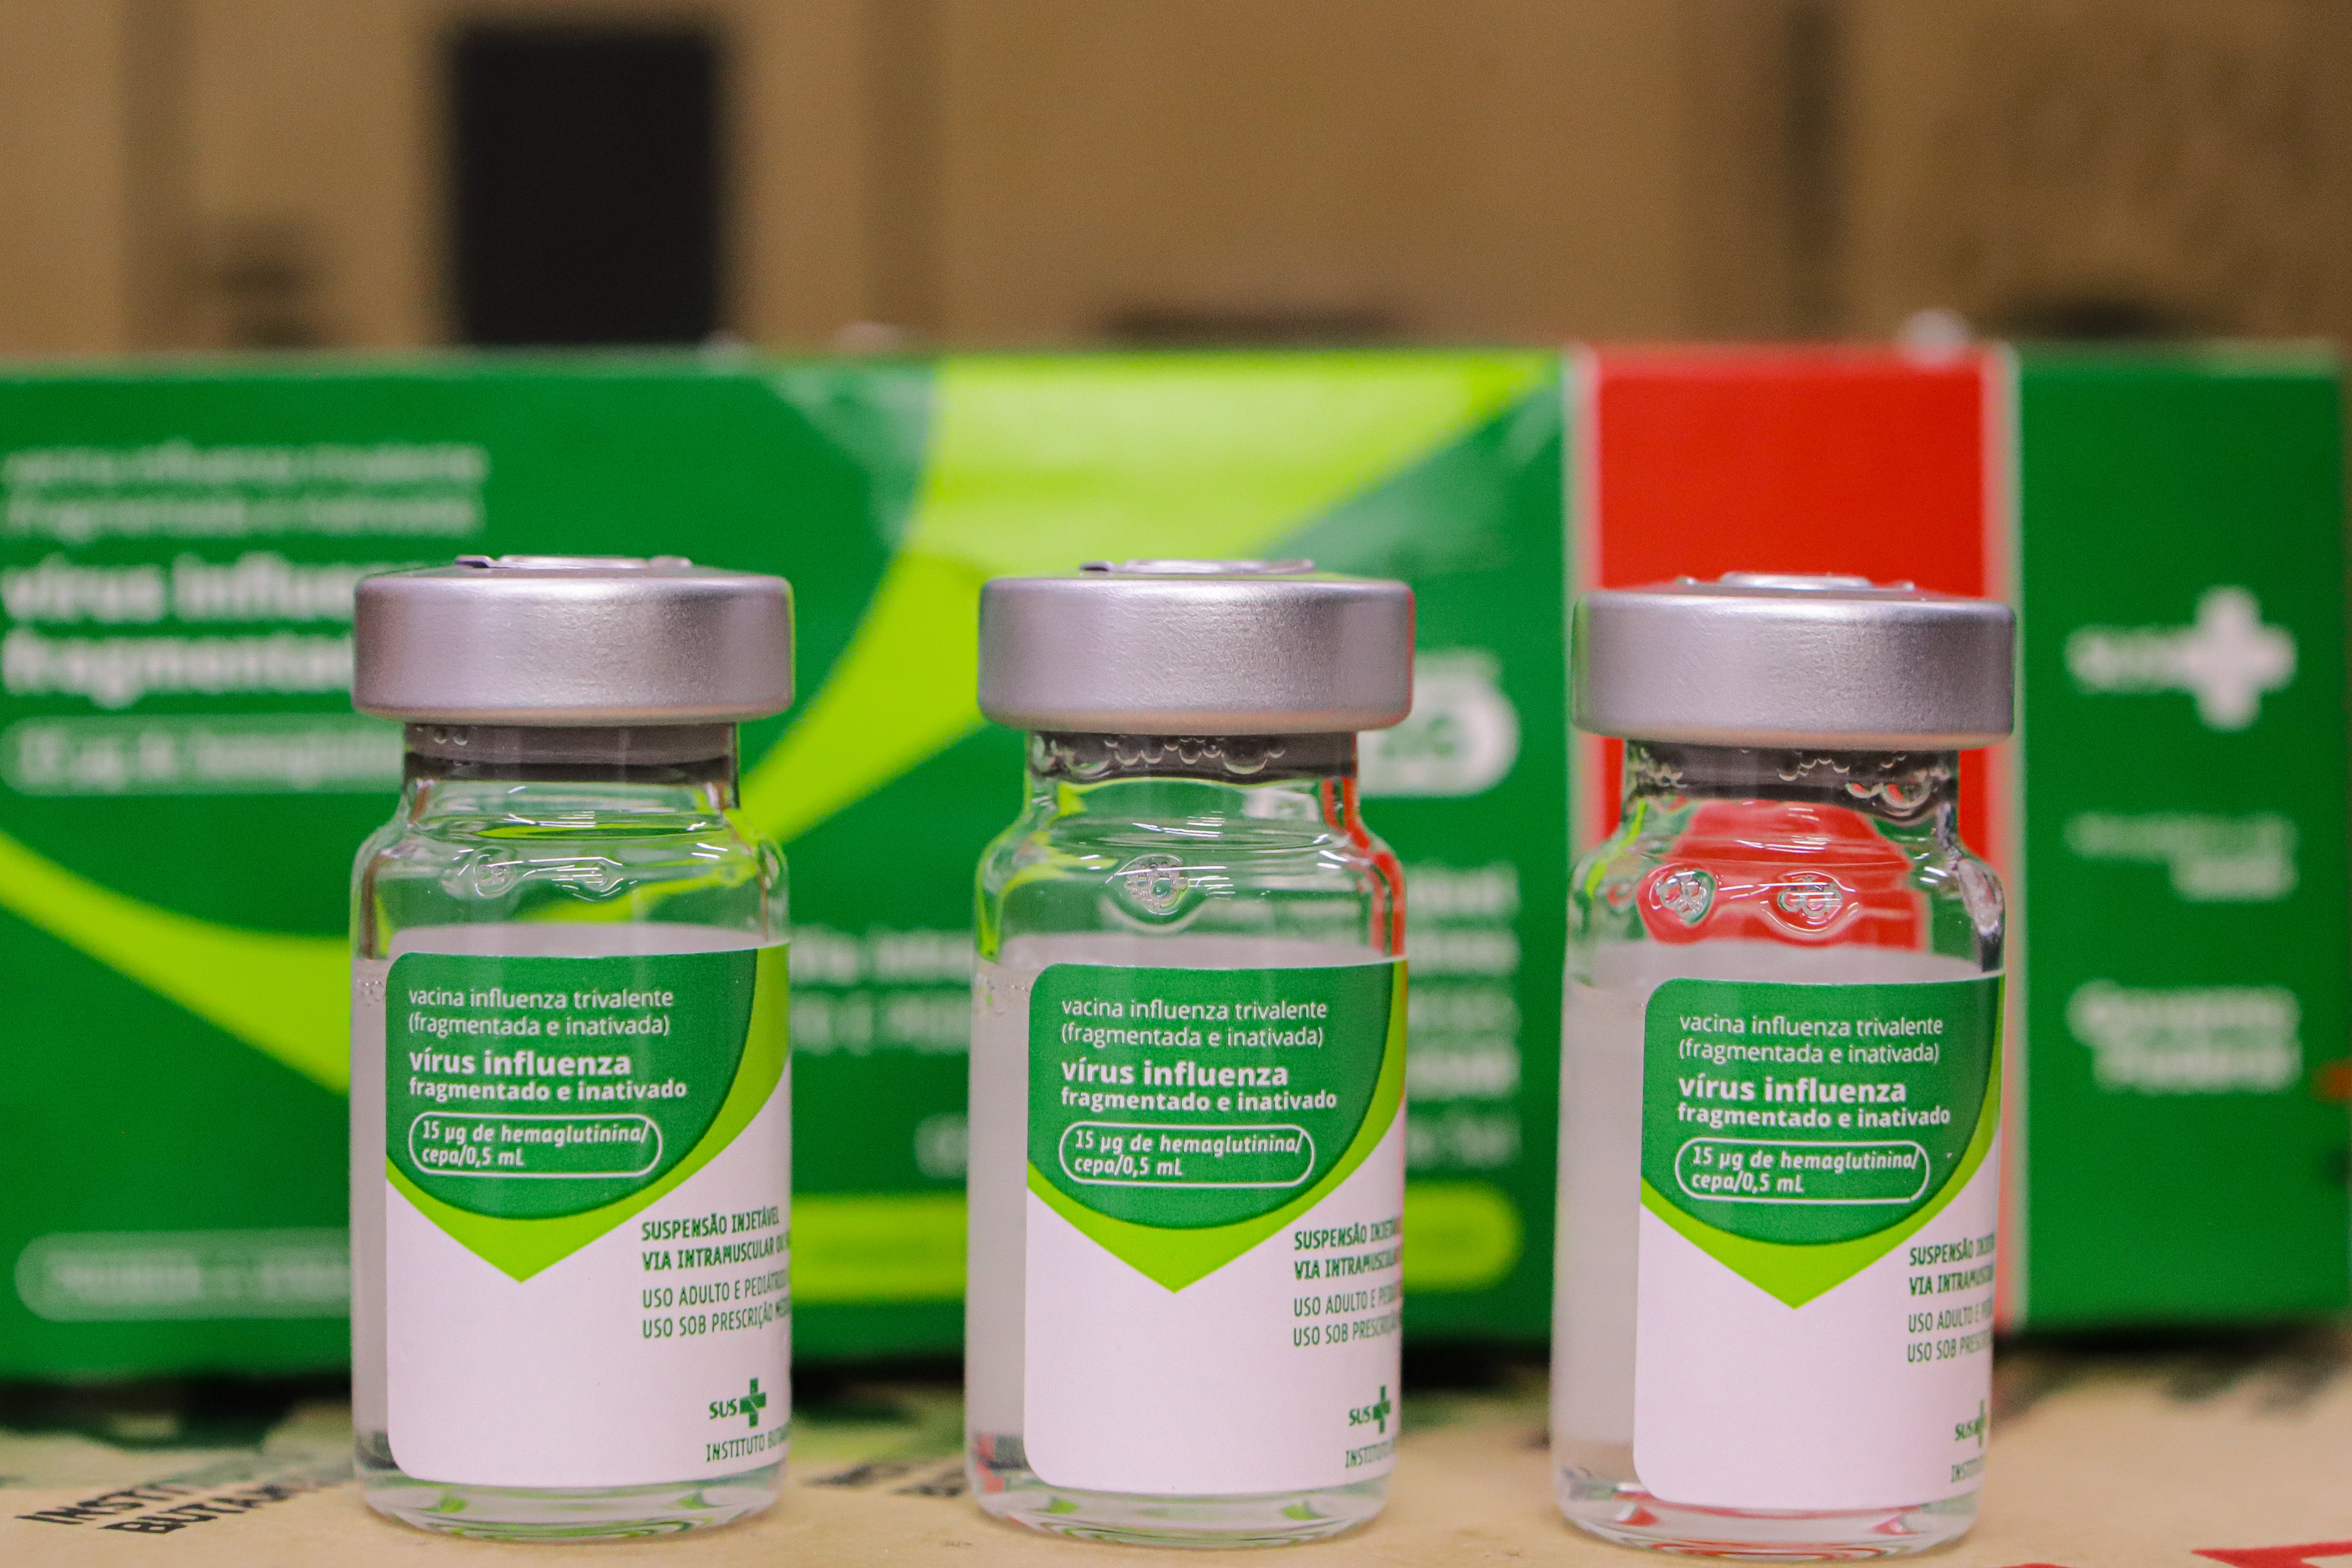 Paraná recebe as primeiras doses de vacinas para a nova campanha contra a gripe Foto: Roberto Dziura Jr/AEN